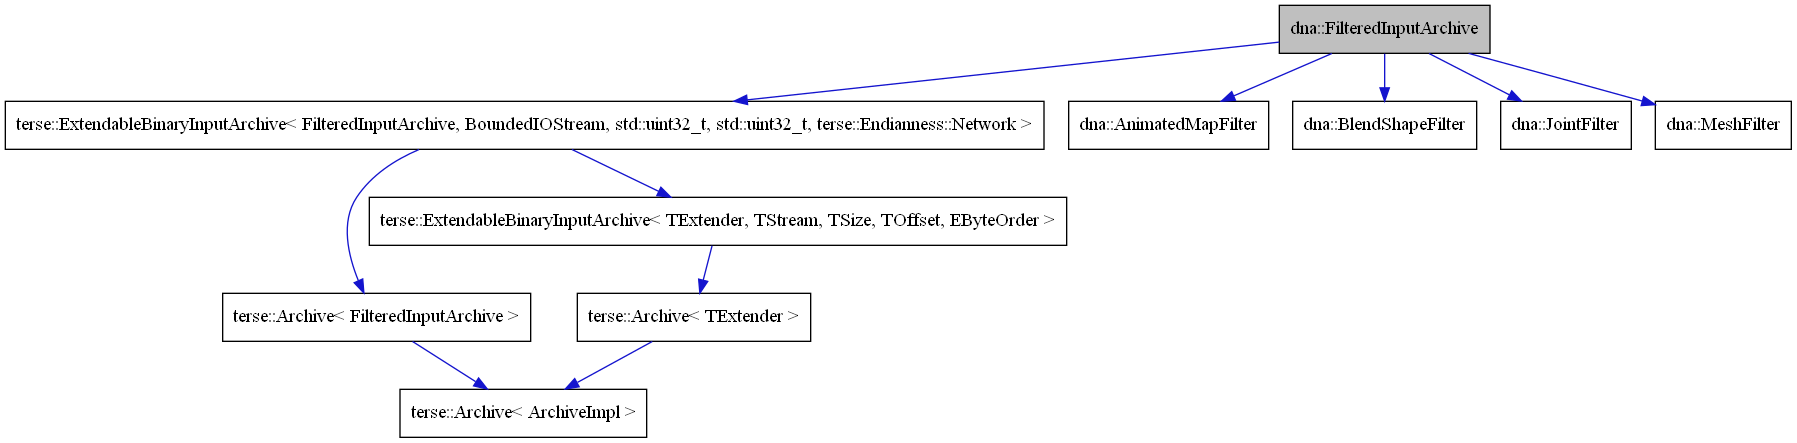 digraph {
    graph [bgcolor="#00000000"]
    node [shape=rectangle style=filled fillcolor="#FFFFFF" font=Helvetica padding=2]
    edge [color="#1414CE"]
    "7" [label="terse::Archive< FilteredInputArchive >" tooltip="terse::Archive< FilteredInputArchive >"]
    "10" [label="terse::Archive< TExtender >" tooltip="terse::Archive< TExtender >"]
    "6" [label="terse::ExtendableBinaryInputArchive< FilteredInputArchive, BoundedIOStream, std::uint32_t, std::uint32_t, terse::Endianness::Network >" tooltip="terse::ExtendableBinaryInputArchive< FilteredInputArchive, BoundedIOStream, std::uint32_t, std::uint32_t, terse::Endianness::Network >"]
    "2" [label="dna::AnimatedMapFilter" tooltip="dna::AnimatedMapFilter"]
    "3" [label="dna::BlendShapeFilter" tooltip="dna::BlendShapeFilter"]
    "1" [label="dna::FilteredInputArchive" tooltip="dna::FilteredInputArchive" fillcolor="#BFBFBF"]
    "4" [label="dna::JointFilter" tooltip="dna::JointFilter"]
    "5" [label="dna::MeshFilter" tooltip="dna::MeshFilter"]
    "8" [label="terse::Archive< ArchiveImpl >" tooltip="terse::Archive< ArchiveImpl >"]
    "9" [label="terse::ExtendableBinaryInputArchive< TExtender, TStream, TSize, TOffset, EByteOrder >" tooltip="terse::ExtendableBinaryInputArchive< TExtender, TStream, TSize, TOffset, EByteOrder >"]
    "7" -> "8" [dir=forward tooltip="template-instance"]
    "10" -> "8" [dir=forward tooltip="template-instance"]
    "6" -> "7" [dir=forward tooltip="public-inheritance"]
    "6" -> "9" [dir=forward tooltip="template-instance"]
    "1" -> "2" [dir=forward tooltip="public-inheritance"]
    "1" -> "3" [dir=forward tooltip="public-inheritance"]
    "1" -> "4" [dir=forward tooltip="public-inheritance"]
    "1" -> "5" [dir=forward tooltip="public-inheritance"]
    "1" -> "6" [dir=forward tooltip="public-inheritance"]
    "9" -> "10" [dir=forward tooltip="public-inheritance"]
}